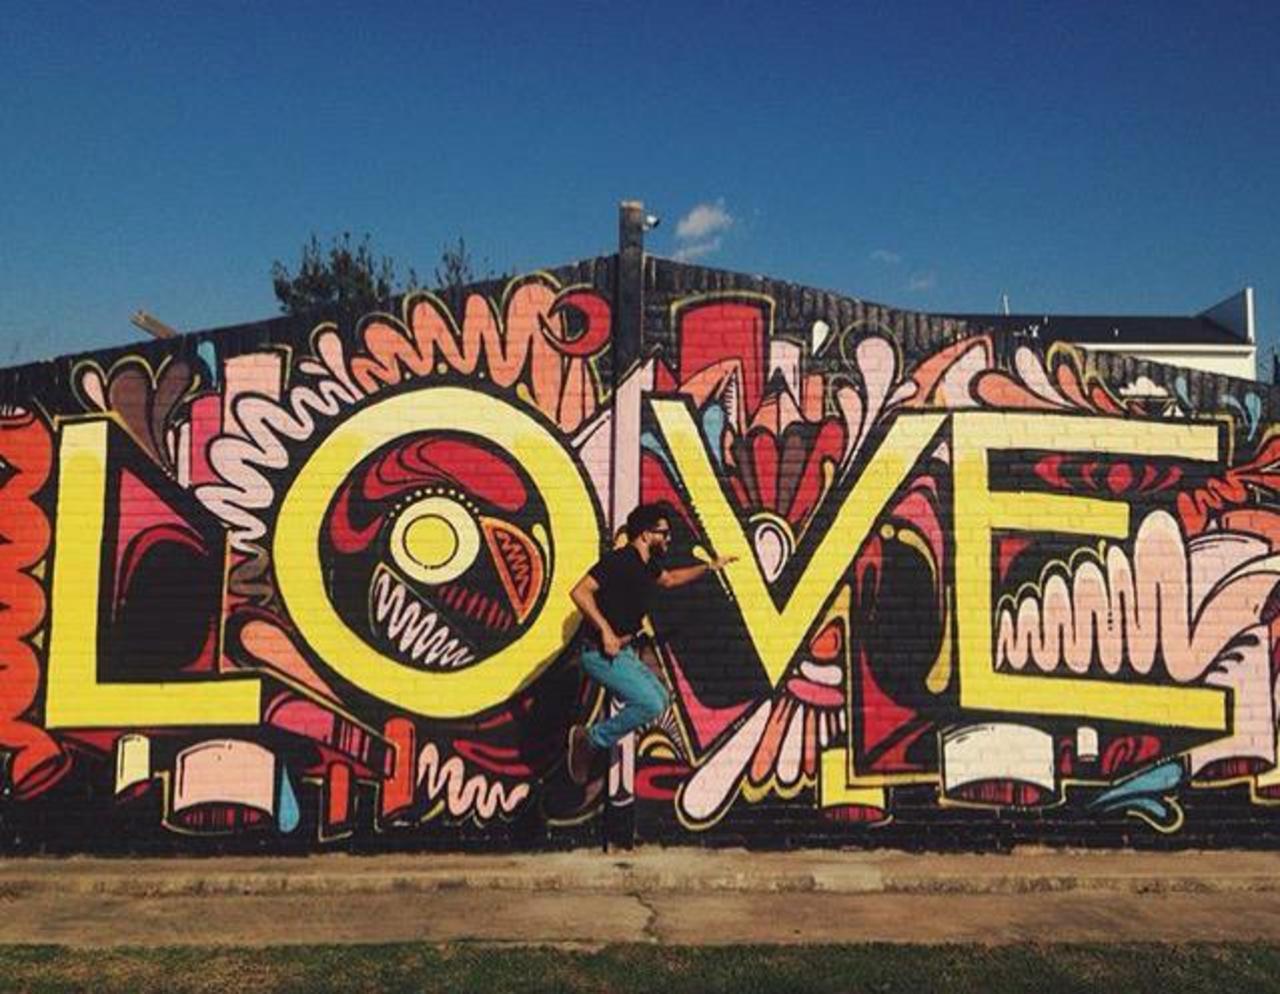 Love ❤️
Street Art by WileyArt

#art #graffiti #mural #streetart http://t.co/kB3owNGydV